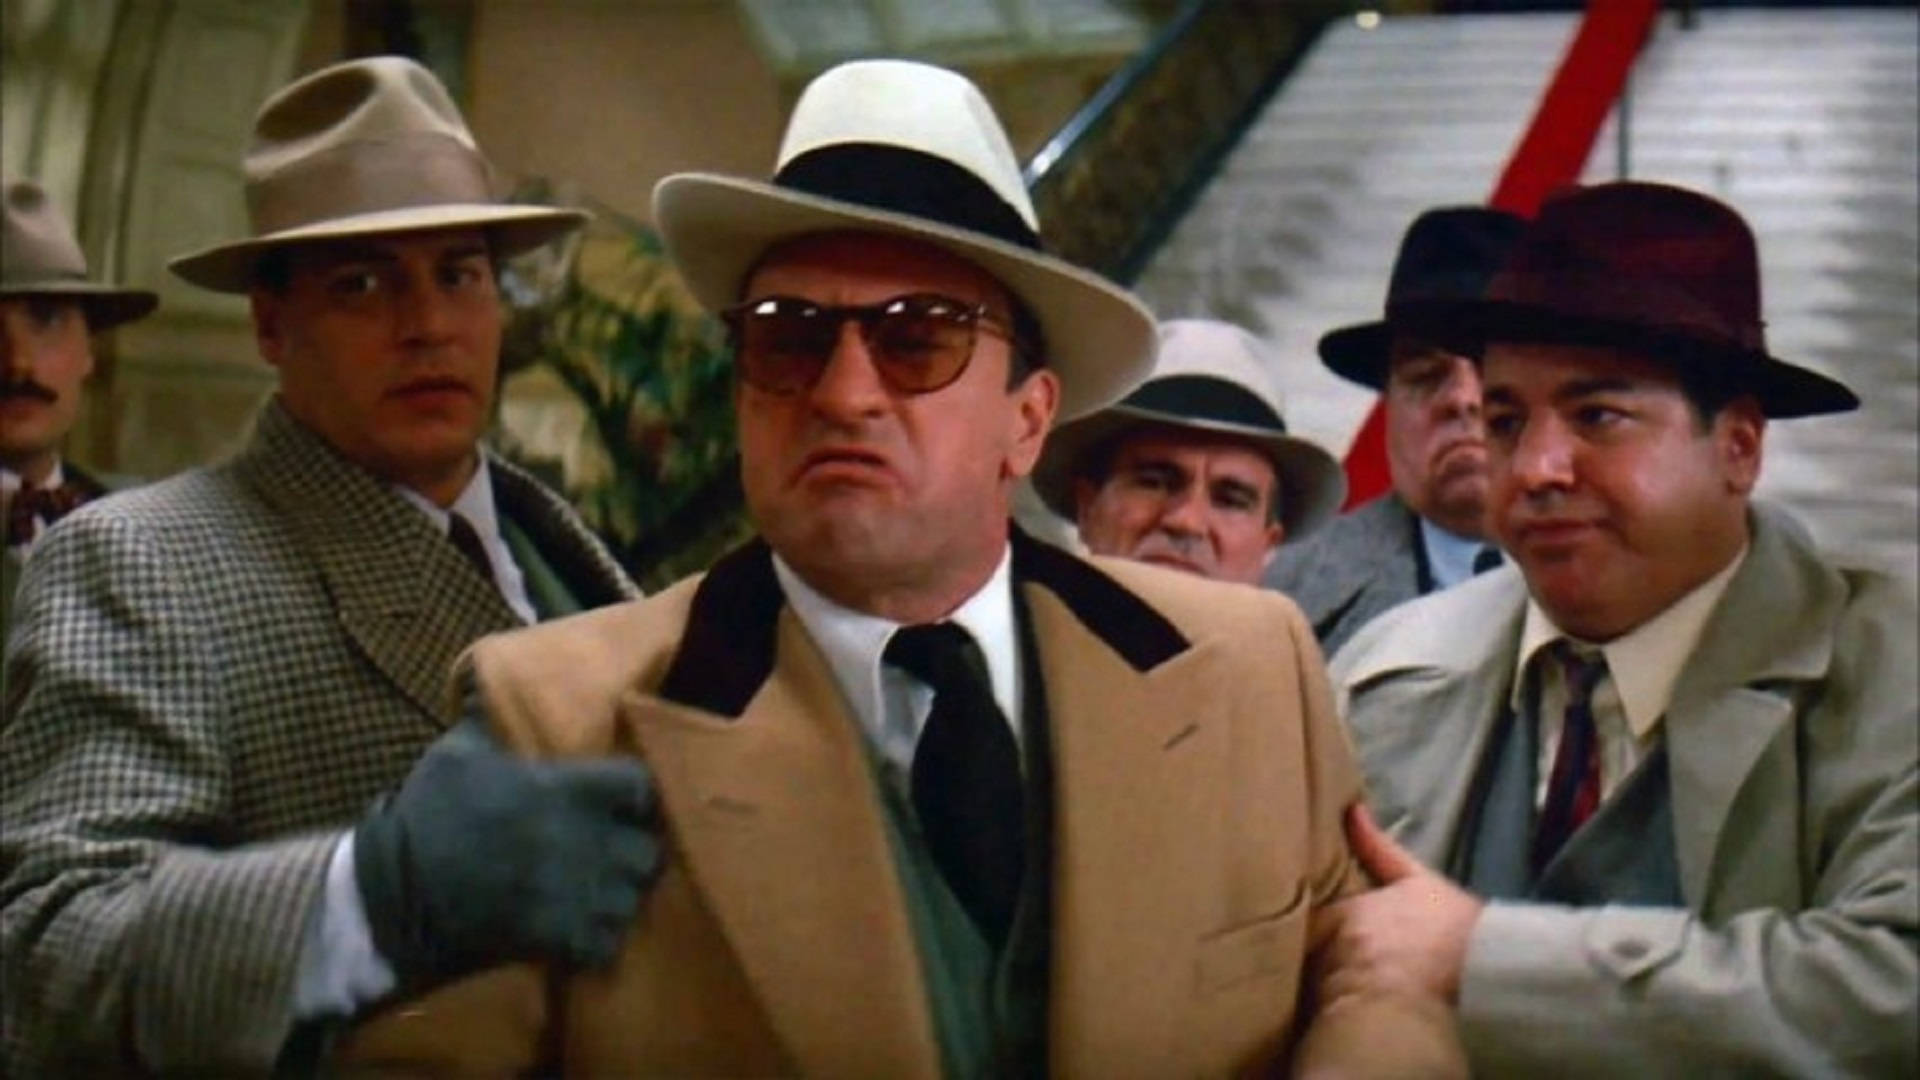 Al Capone With The Mafia Gang Background